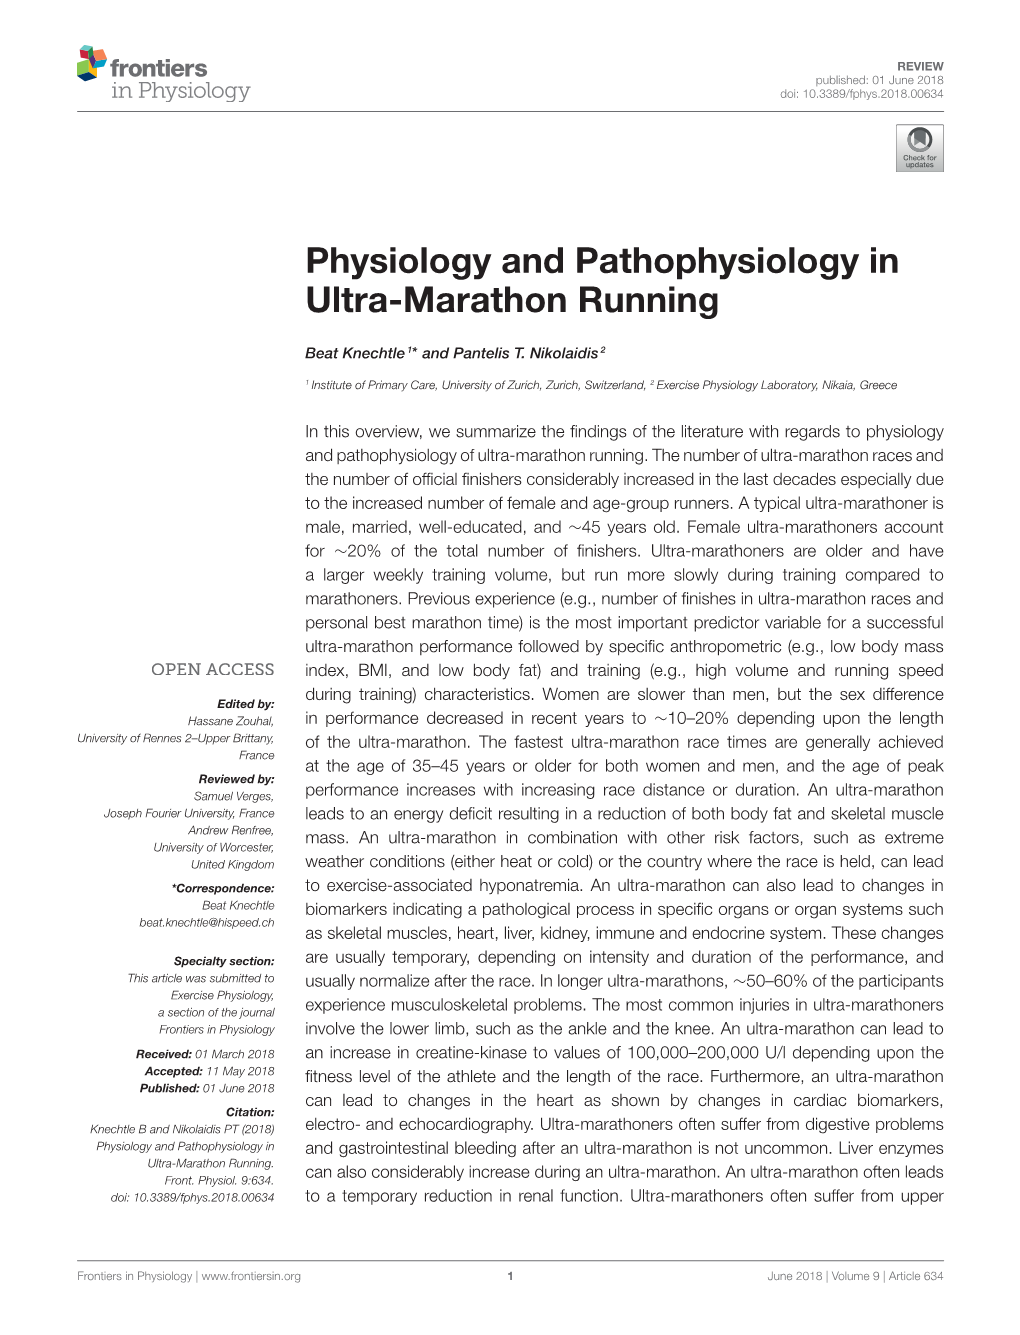 Physiology and Pathophysiology in Ultra-Marathon Running